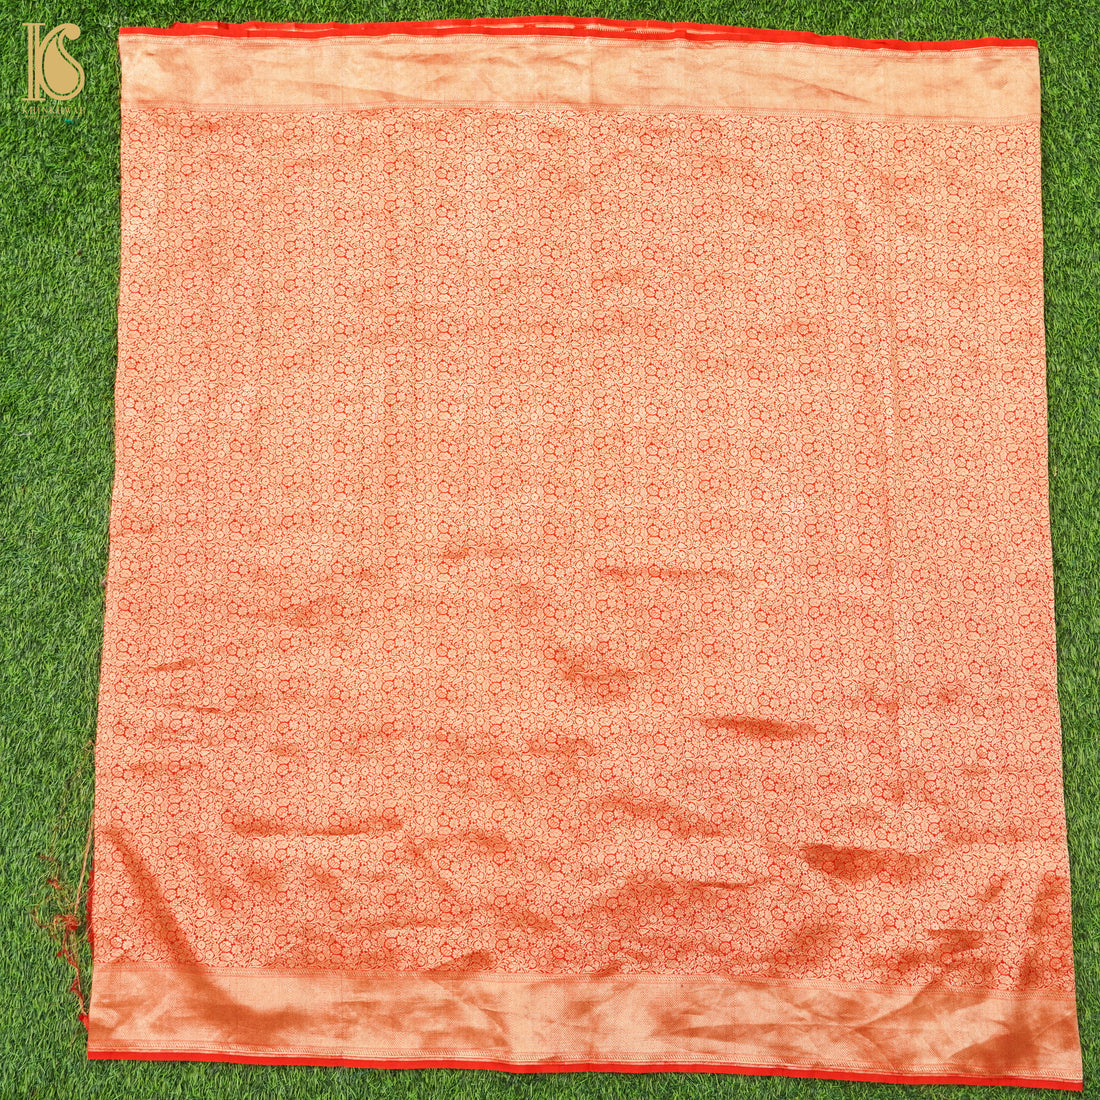 Handloom Red Pure Brocade Banarasi Fabric - Khinkhwab